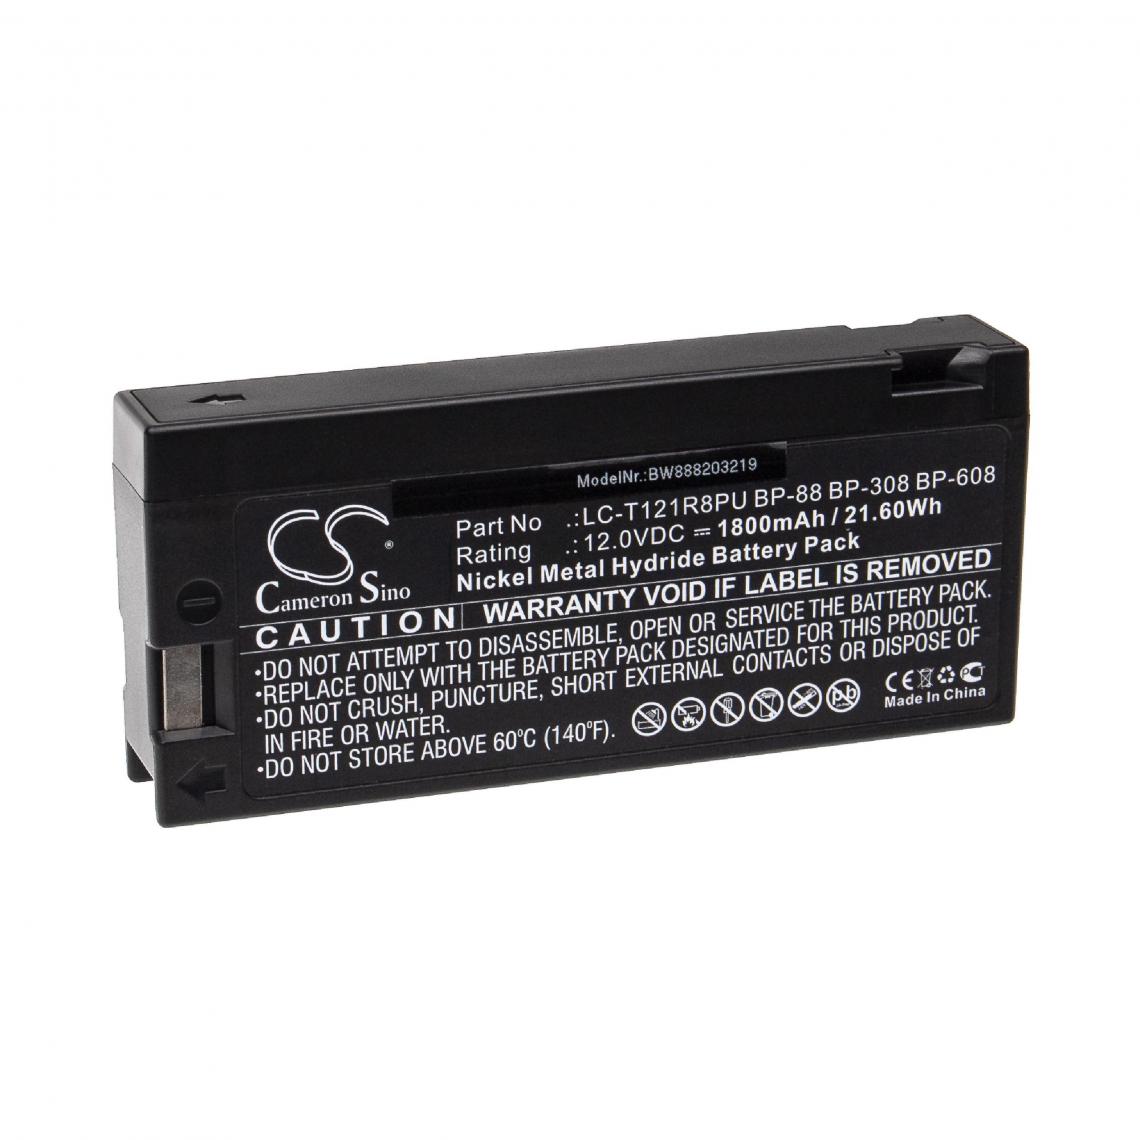 Vhbw - vhbw Batterie compatible avec MAGNAVOX CVJ-360, CVK-300, CVK-310, CVK-315, CVK-320, CVK-610, CVK-611 appareil médical (1800mAh, 12V, NiMH) - Piles spécifiques